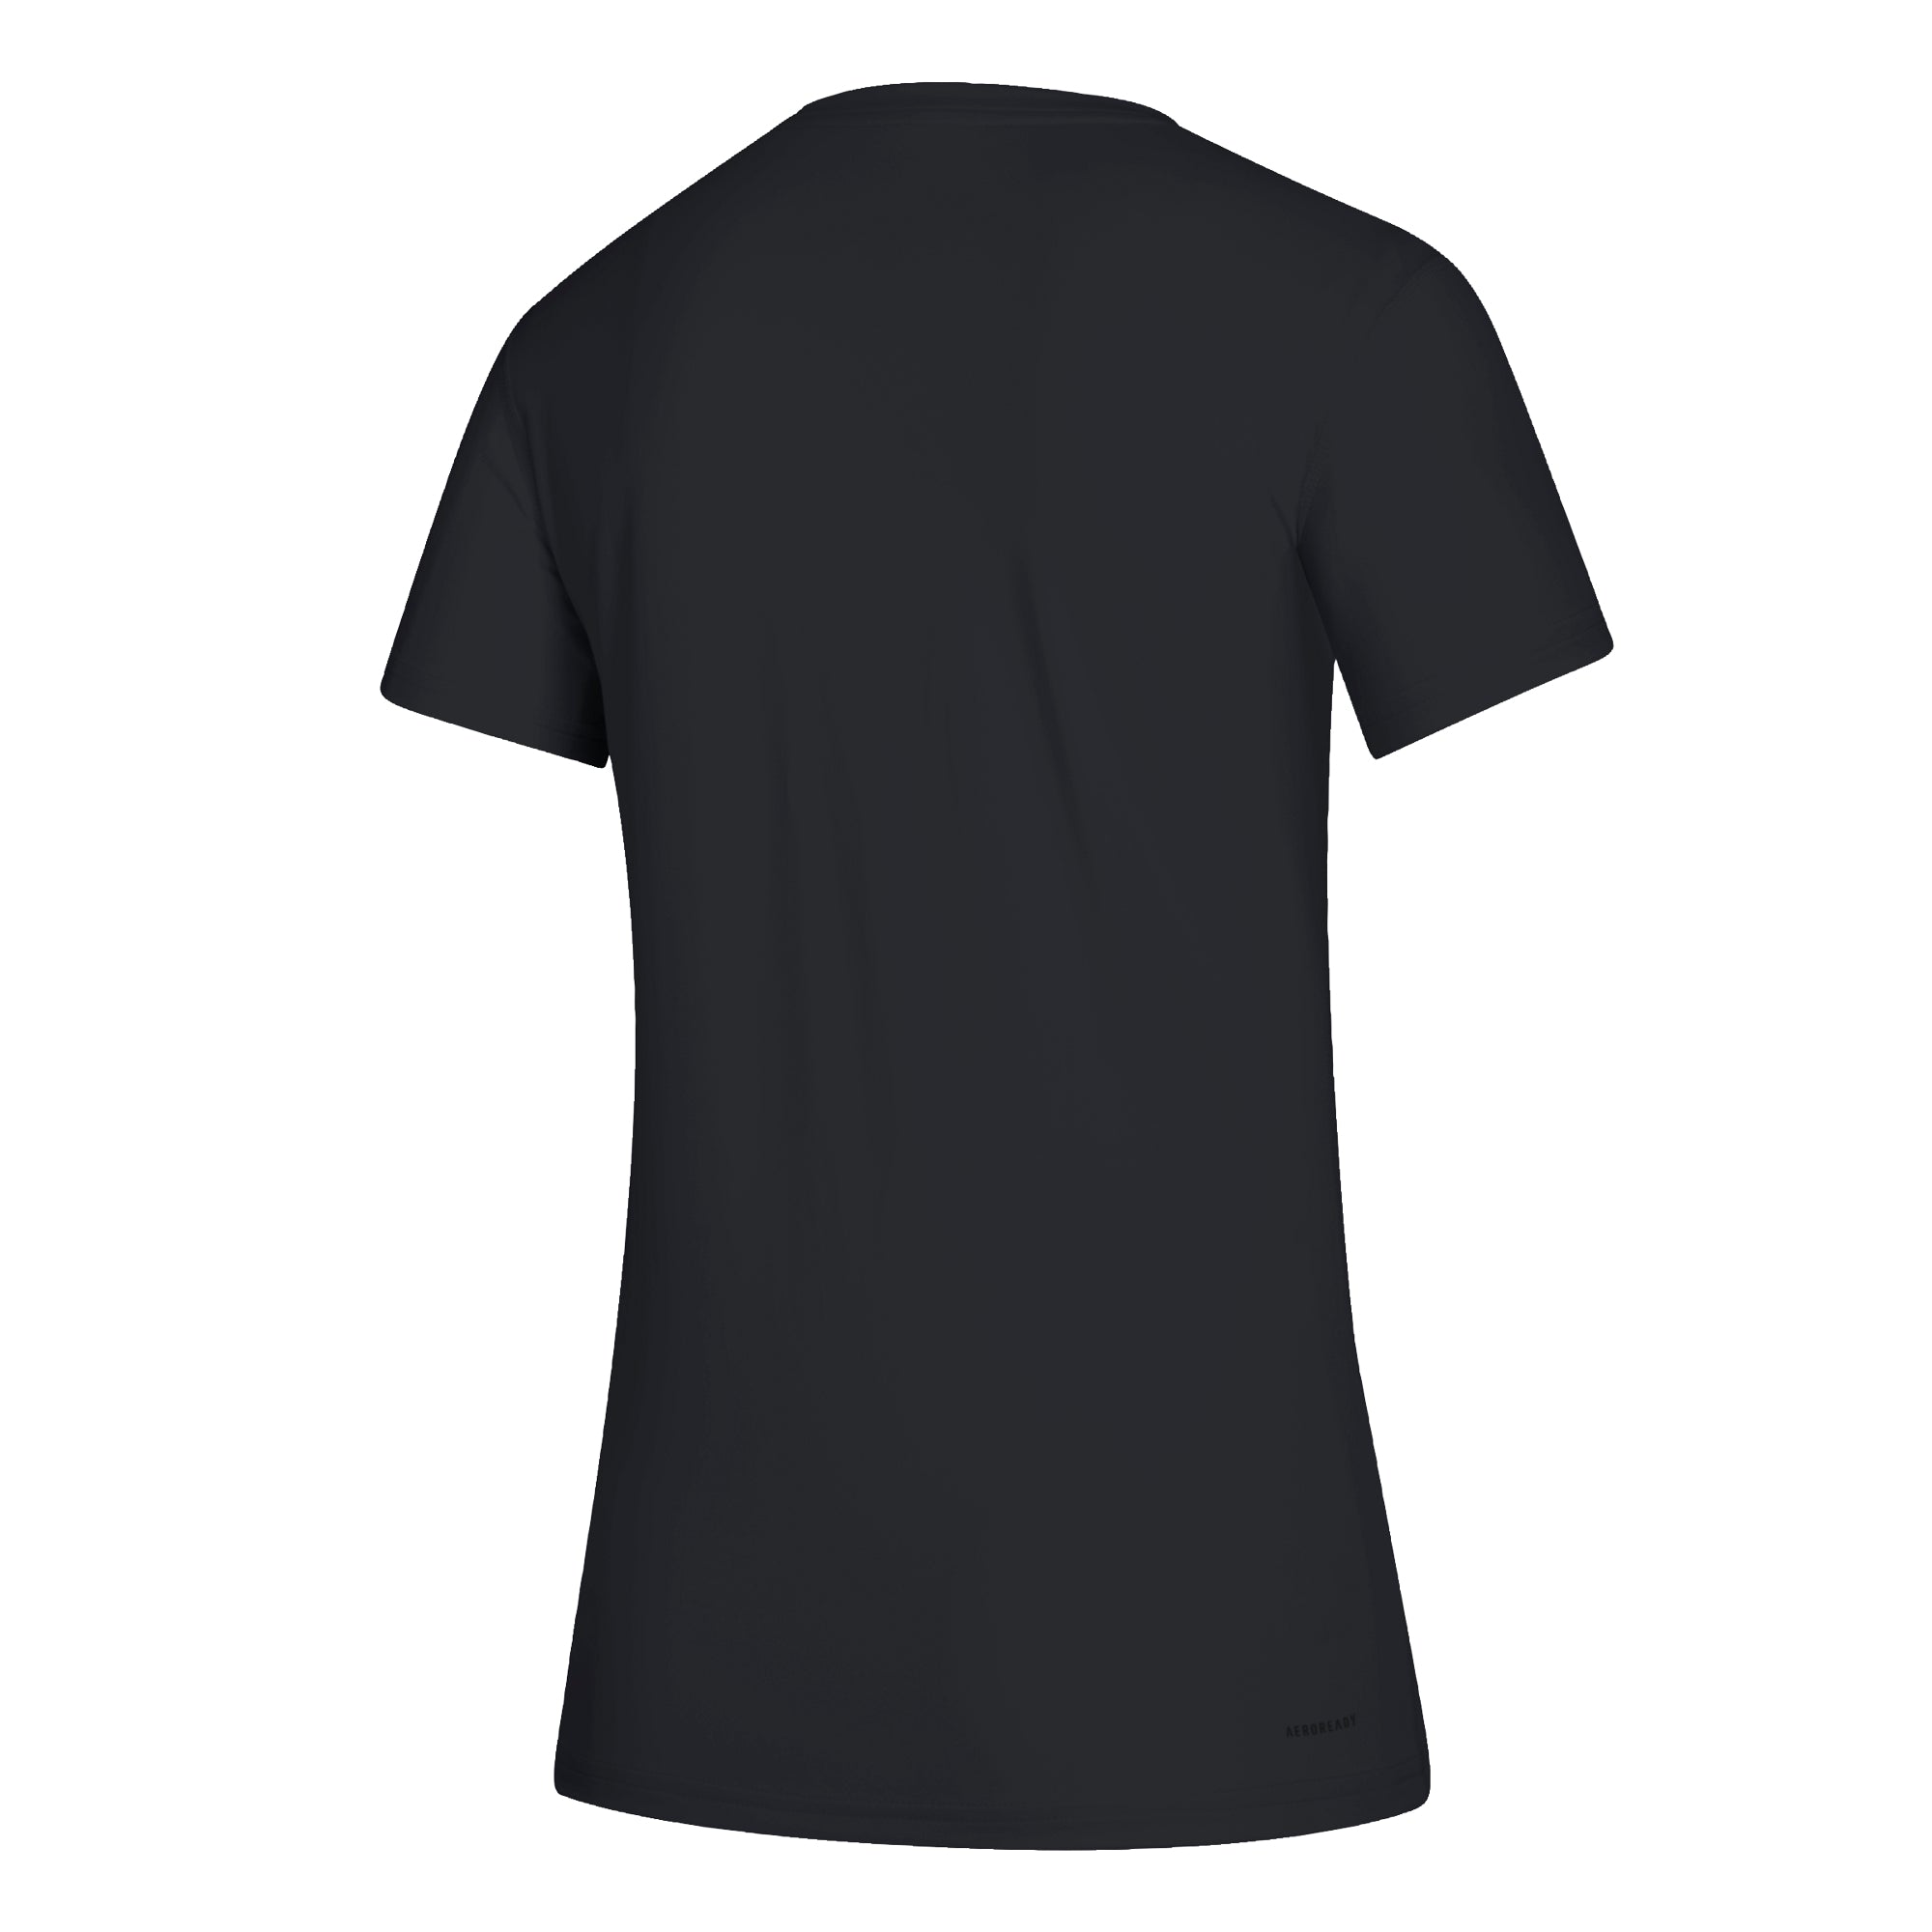 Inter Miami CF Creator SS Women's Wordmark Goals T-Shirt - Black